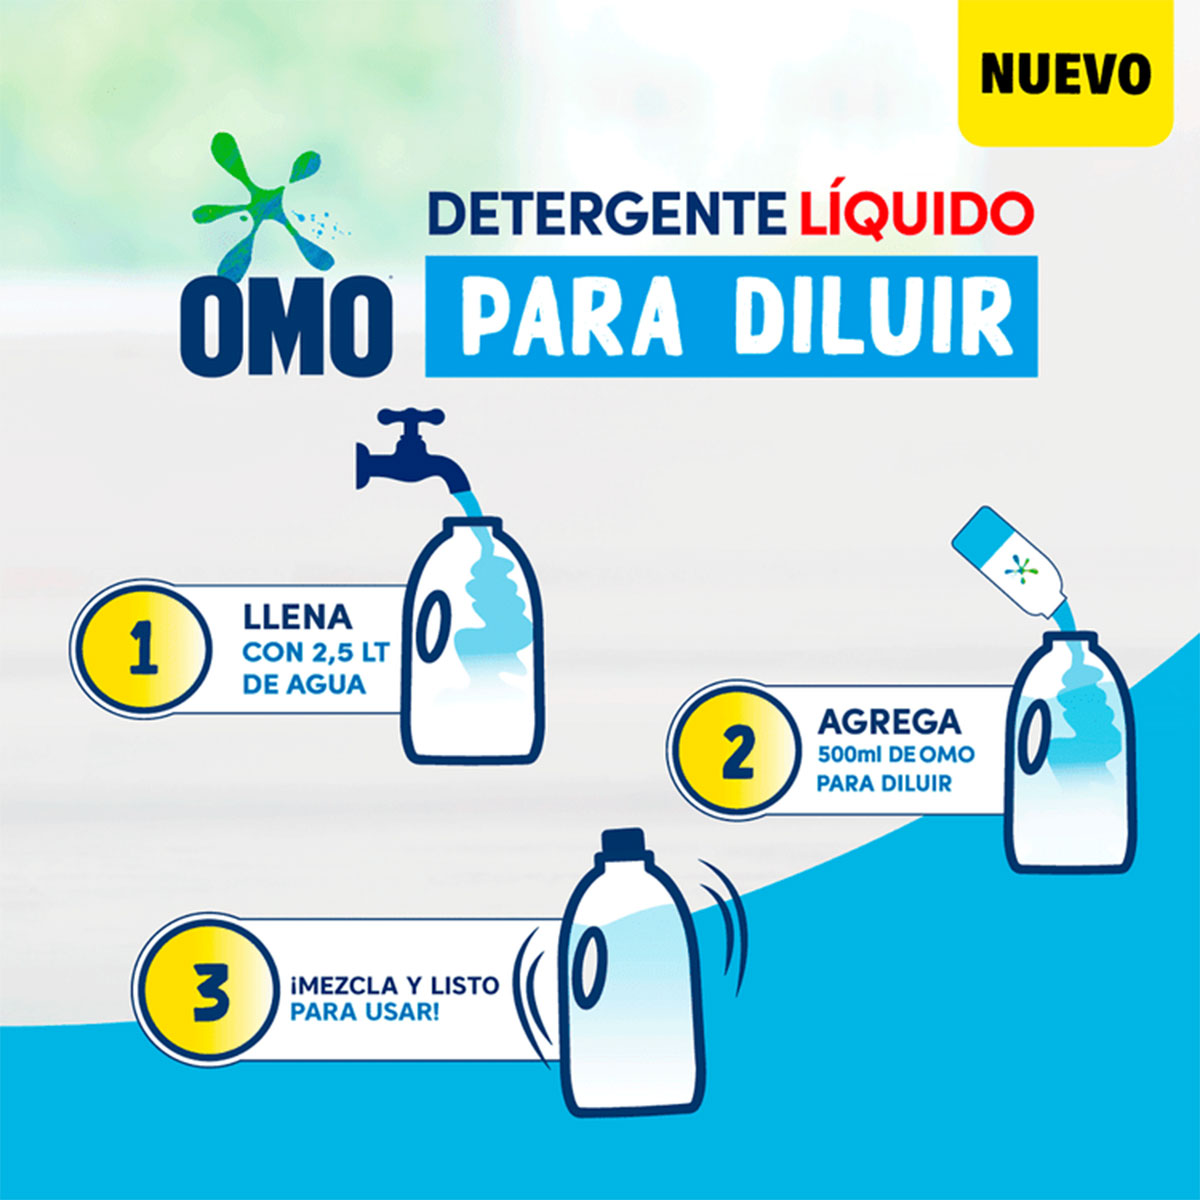 Pack Detergente líquido para diluir OMO 500 ml (rinde 3 litros) 2x $9.990